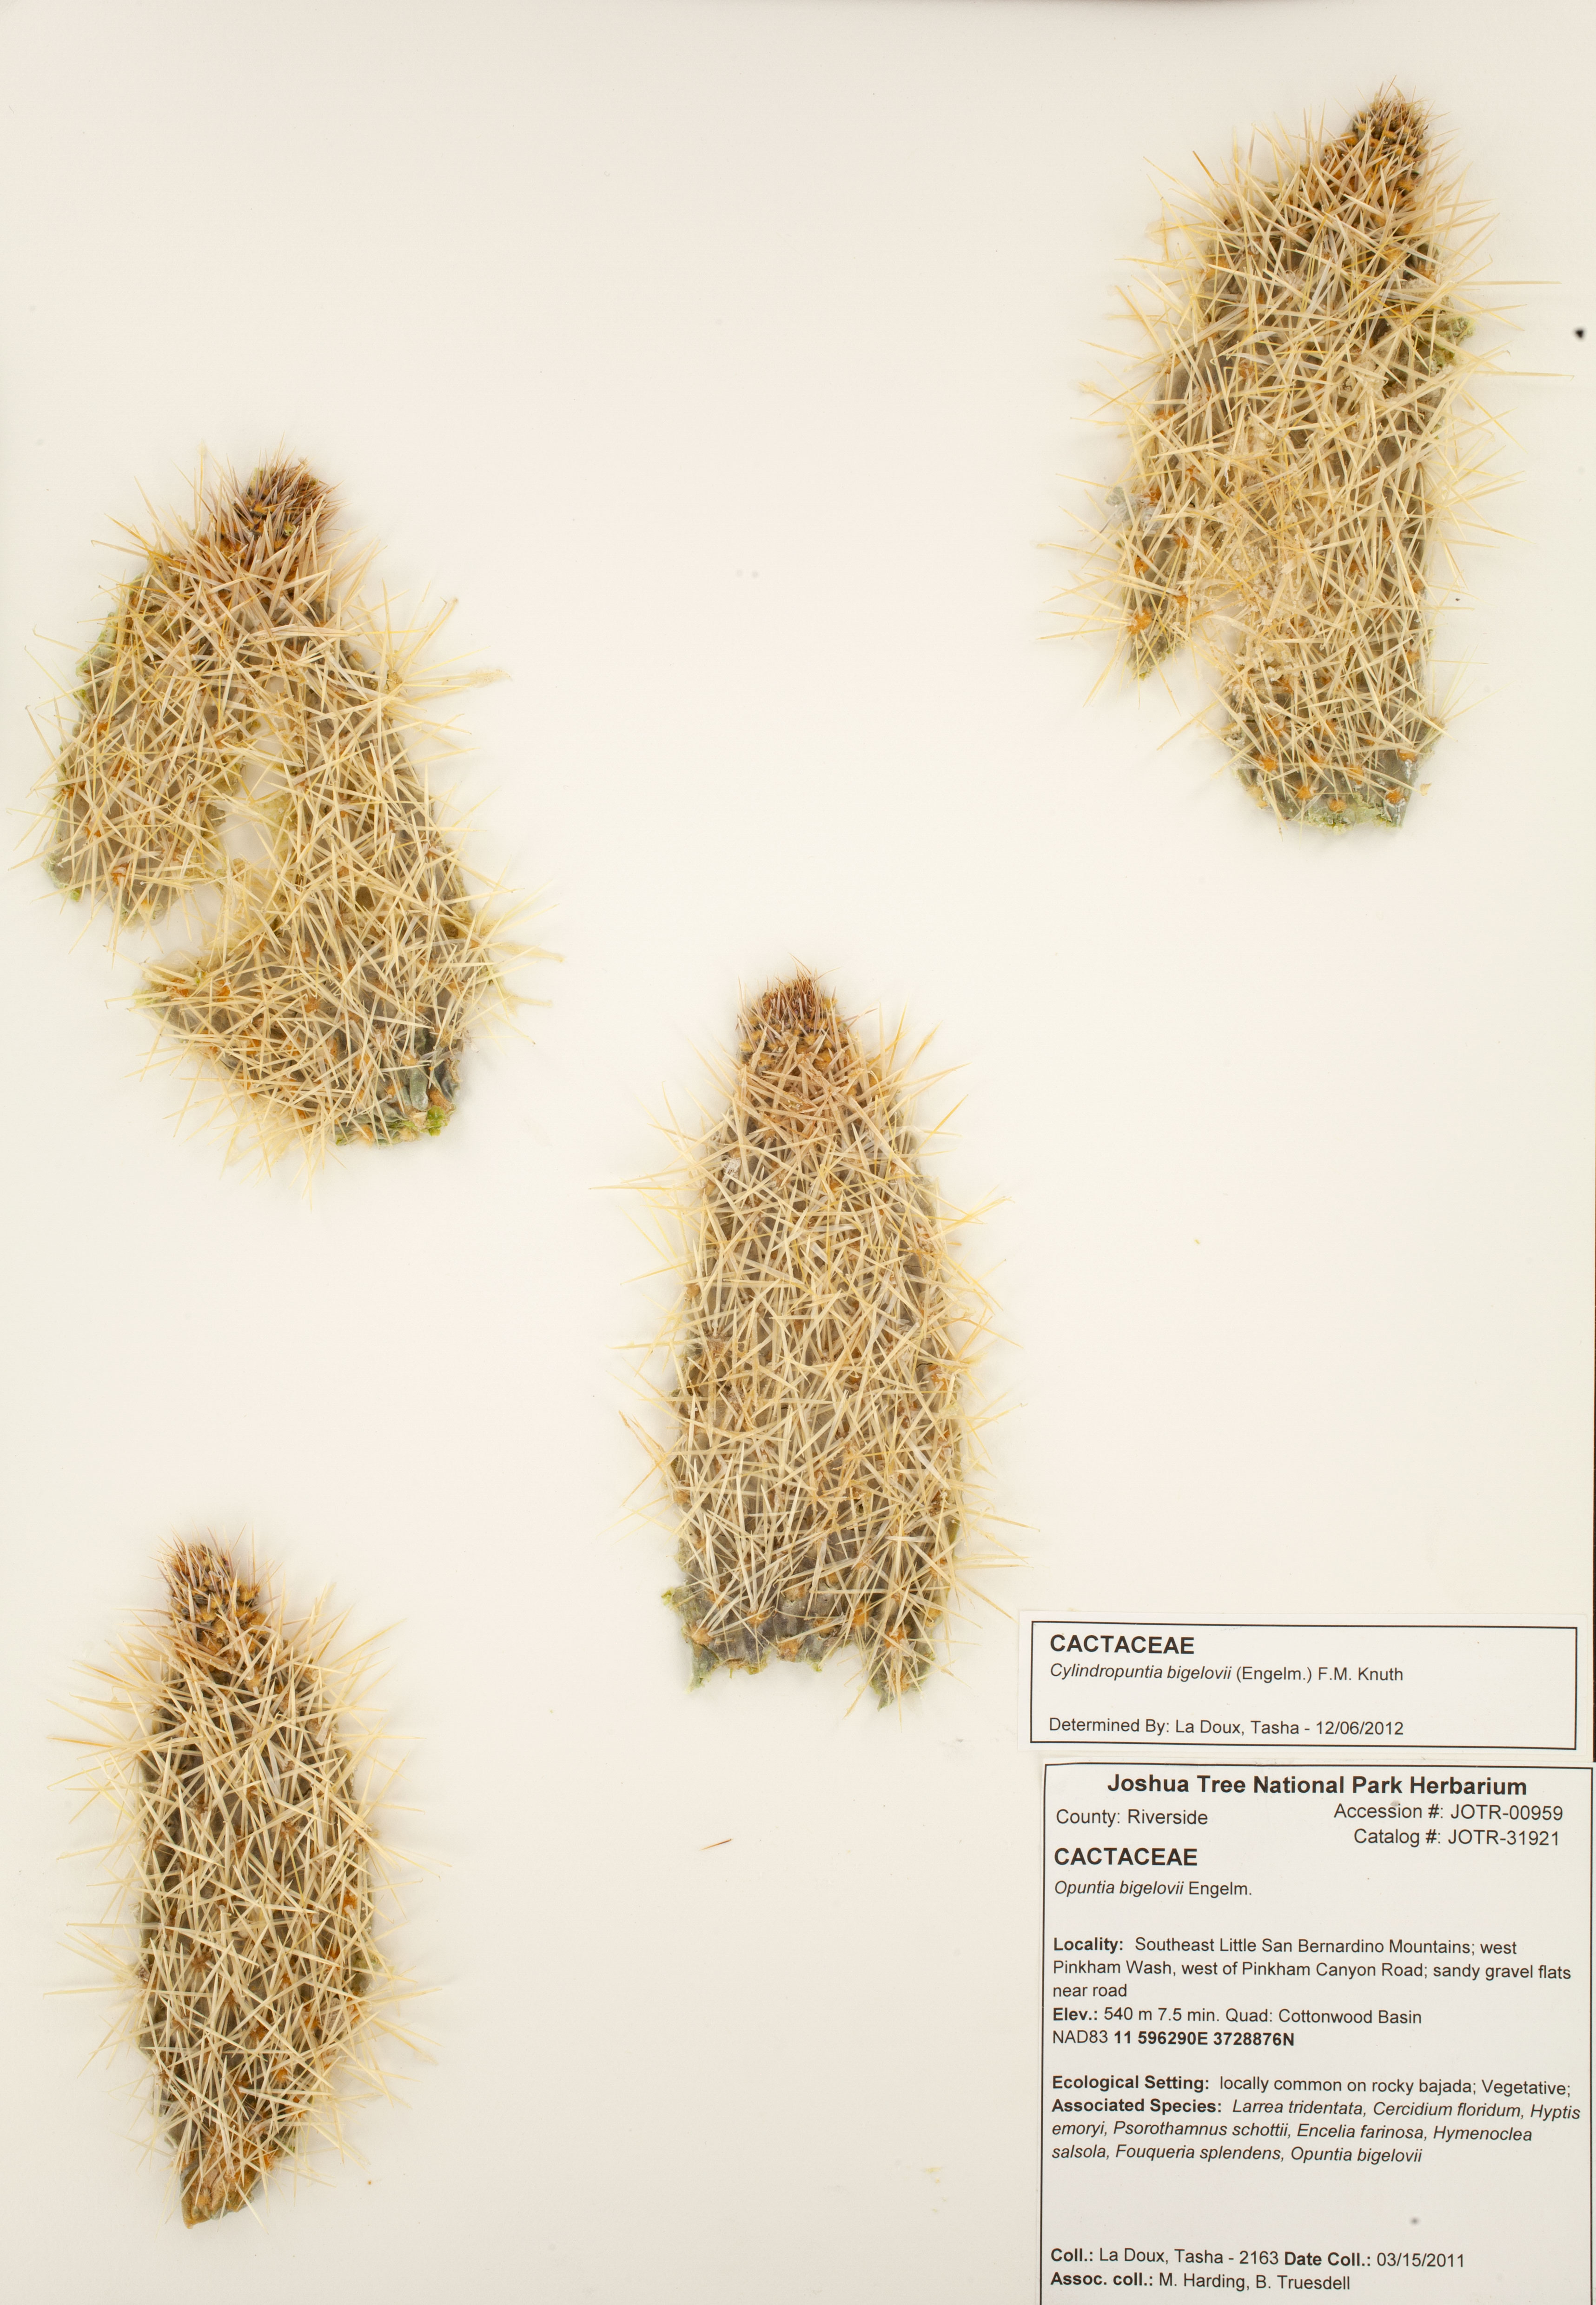 Teddy Bear Cholla (Cylindropuntia bigelovii) joints